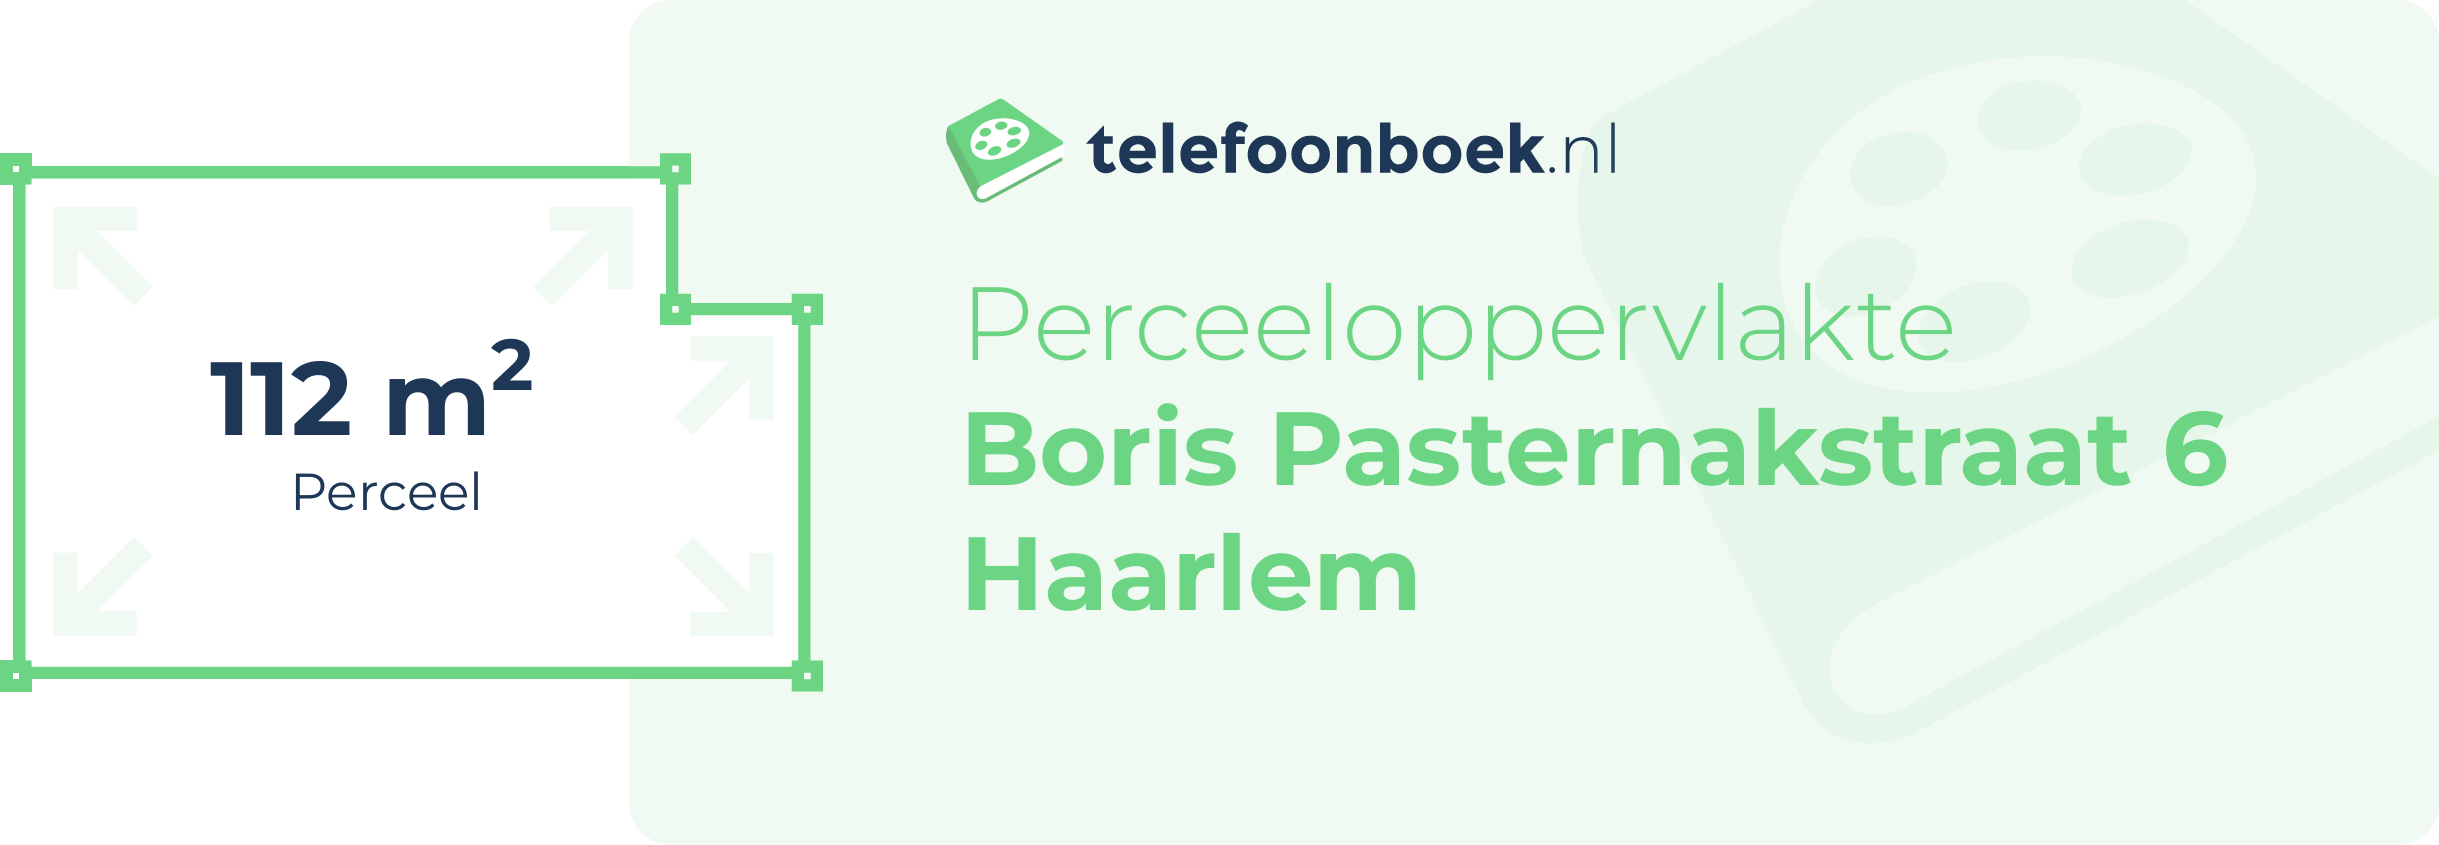 Perceeloppervlakte Boris Pasternakstraat 6 Haarlem